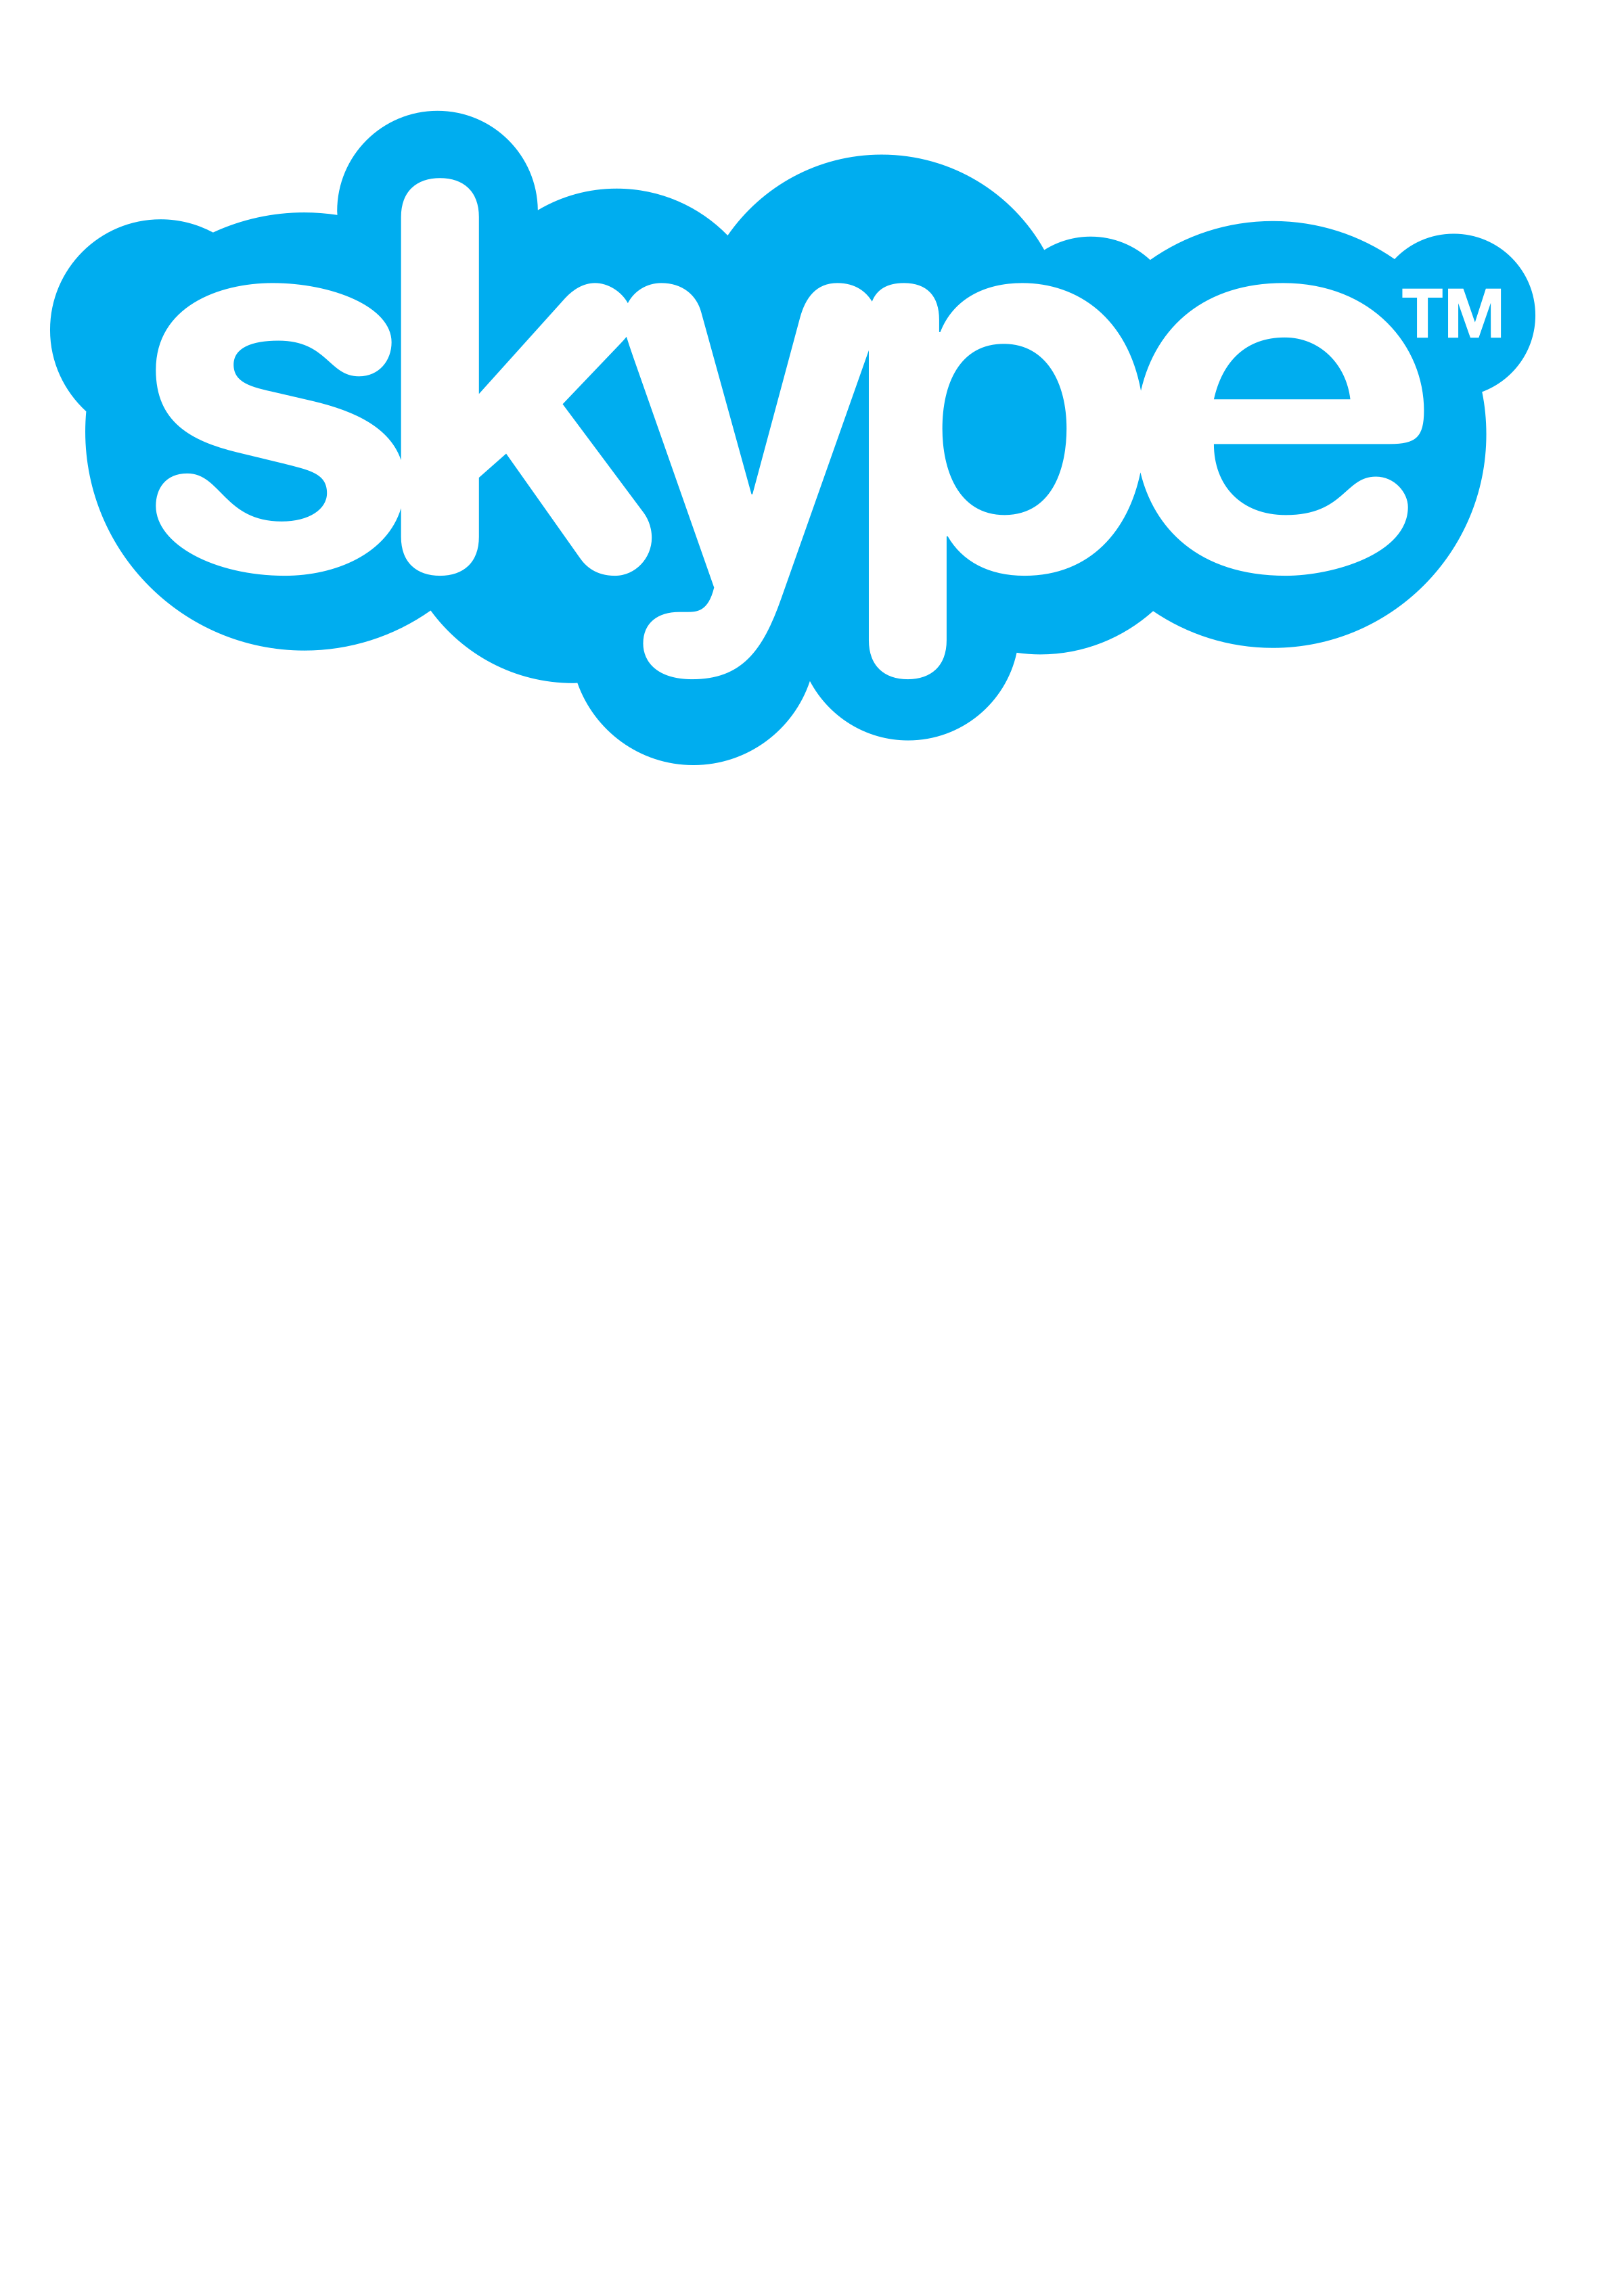 Skype Logo - Skype Logo PNG Transparent & SVG Vector